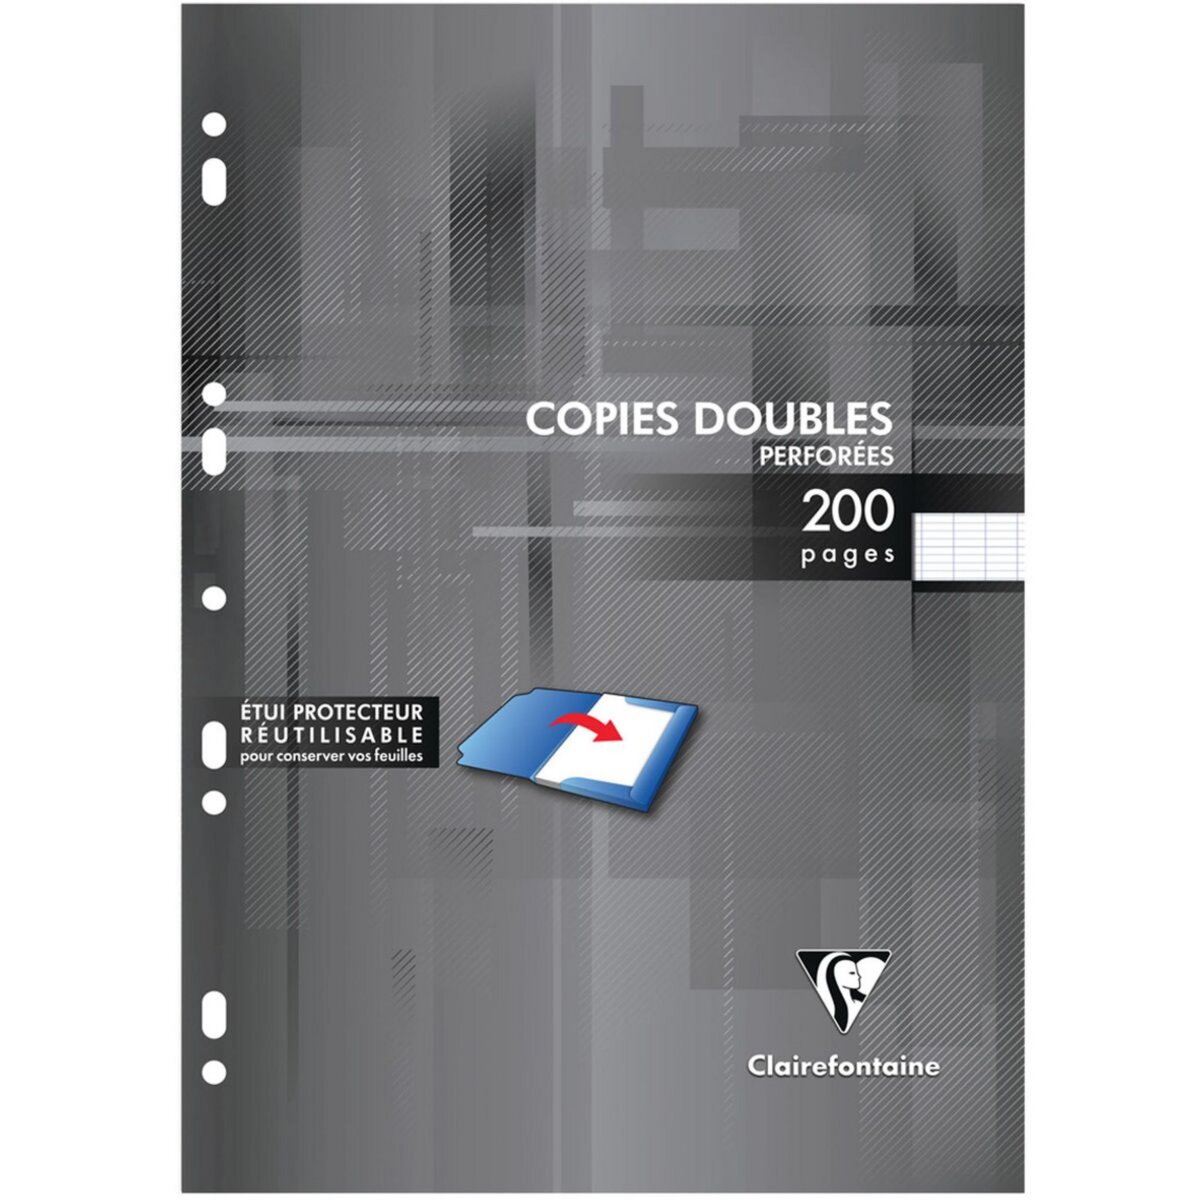 Clairefontaine - 200 copies doubles A4 - grands carreaux (Seyes